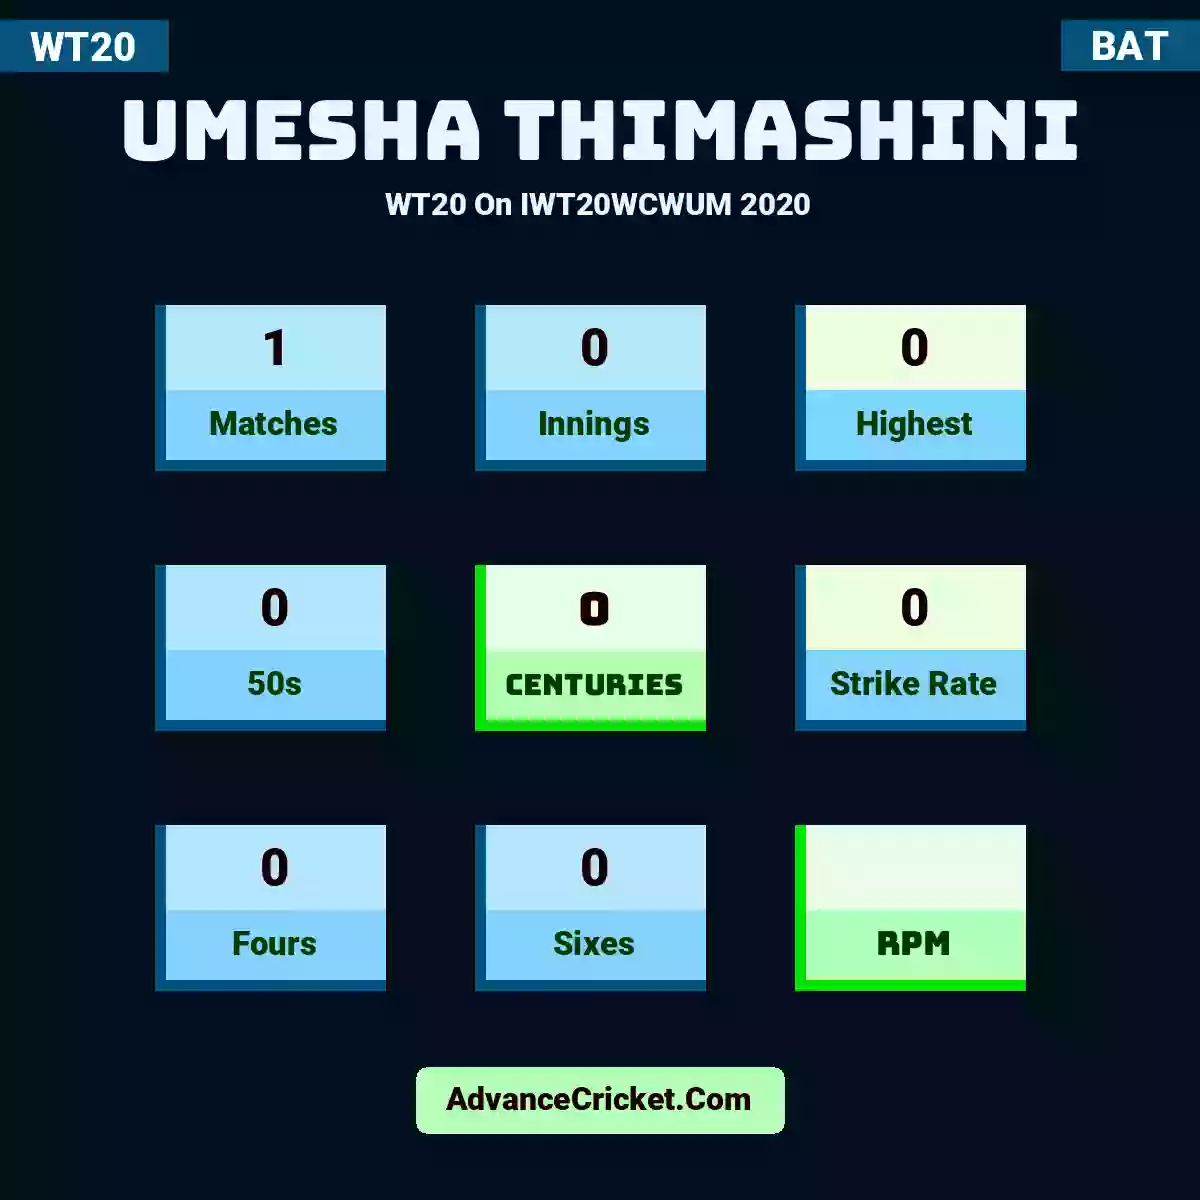 Umesha Thimashini WT20  On IWT20WCWUM 2020, Umesha Thimashini played 1 matches, scored 0 runs as highest, 0 half-centuries, and 0 centuries, with a strike rate of 0. U.Thimashini hit 0 fours and 0 sixes.